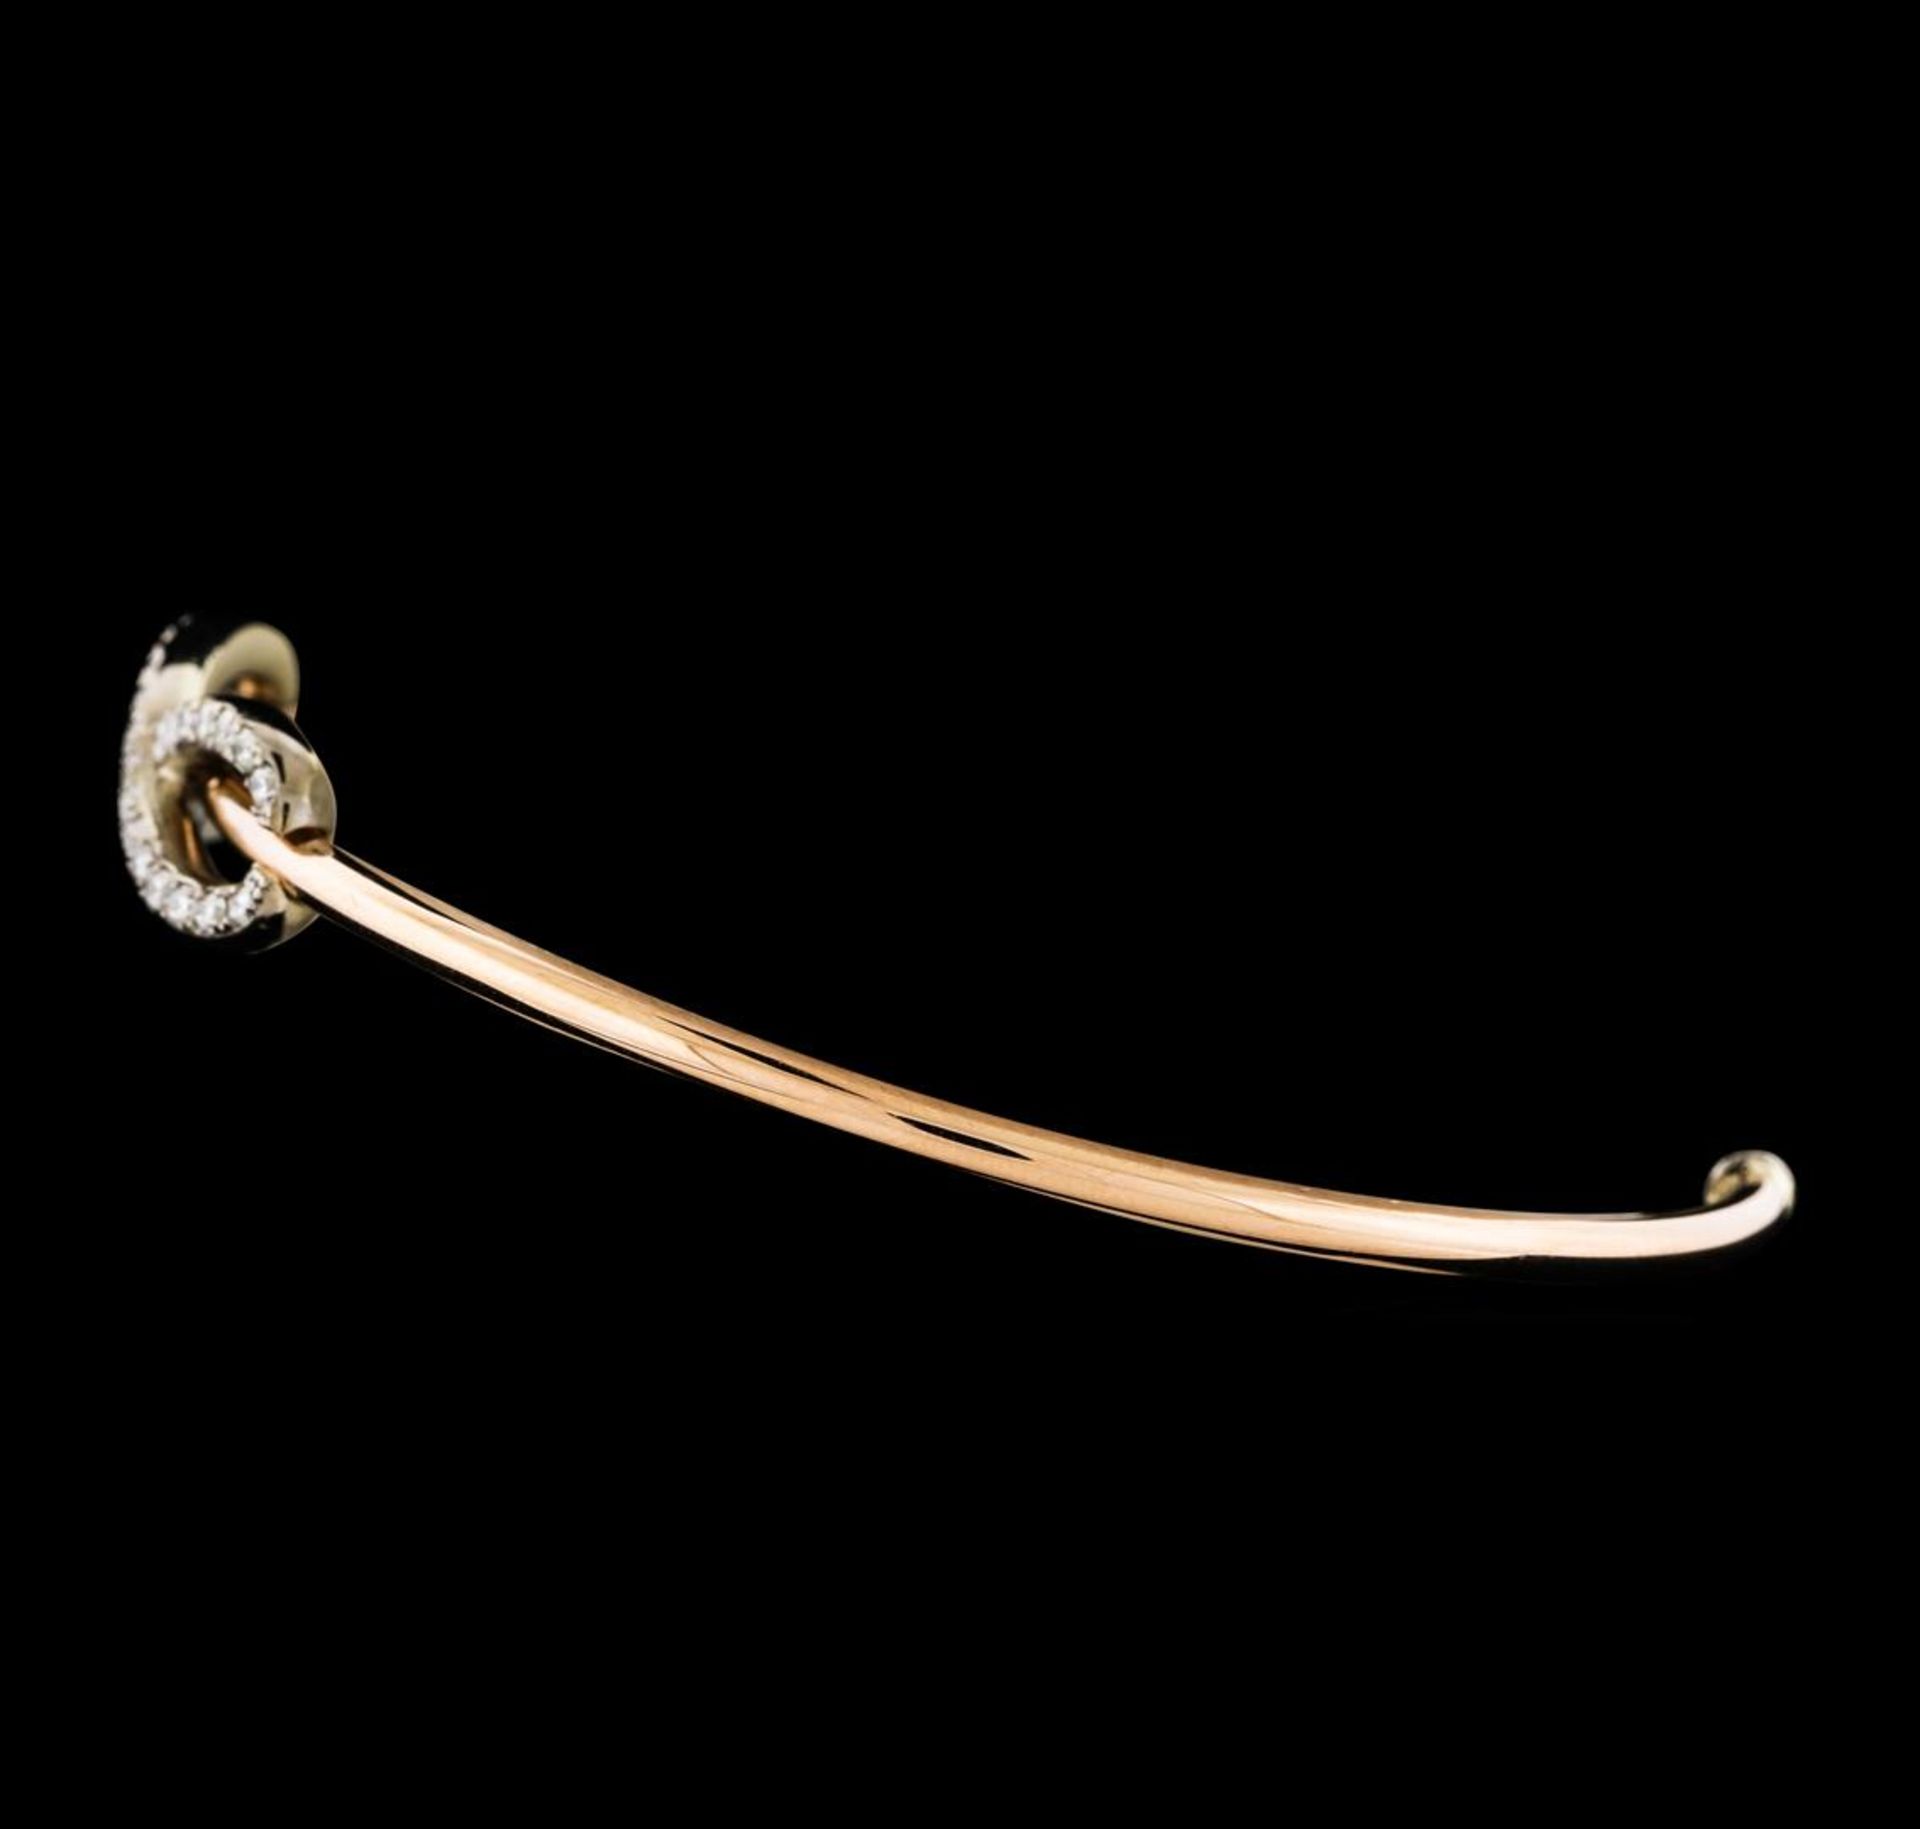 0.45 ctw Diamond Bracelet - 14KT Two-Tone Gold - Image 2 of 3